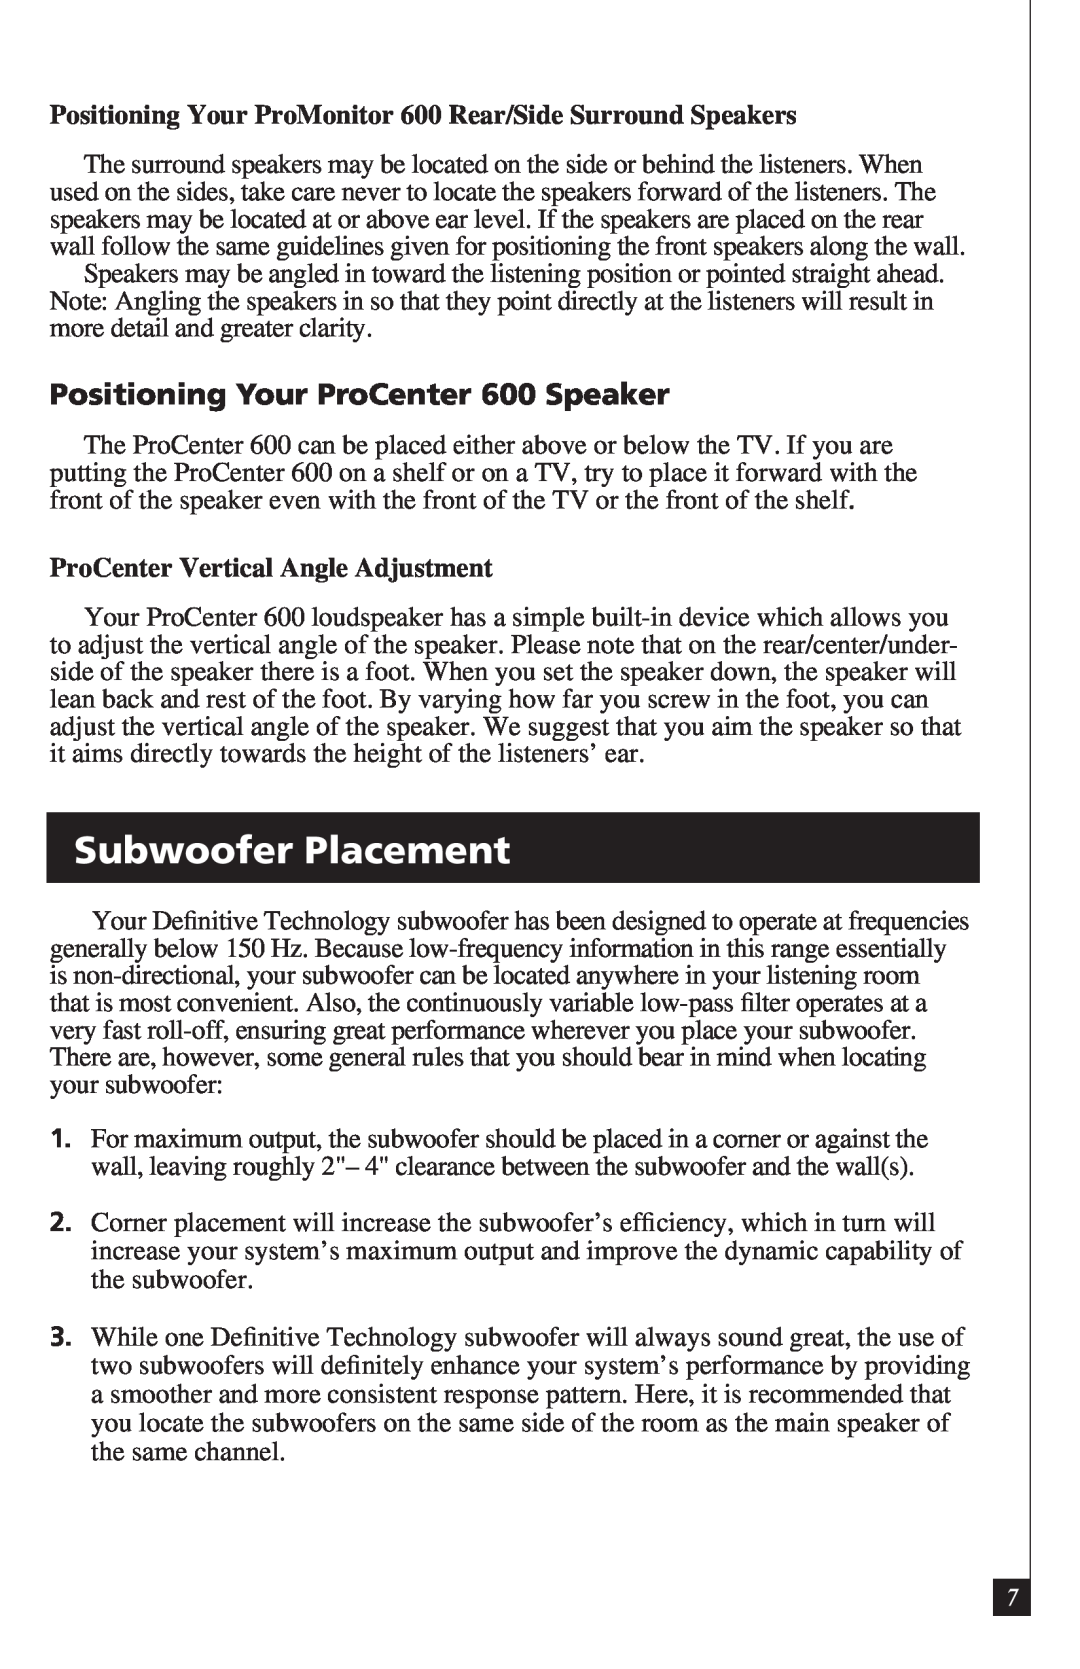 Definitive Technology PROCINEMA6006 owner manual Subwoofer Placement, Positioning Your ProCenter 600 Speaker 